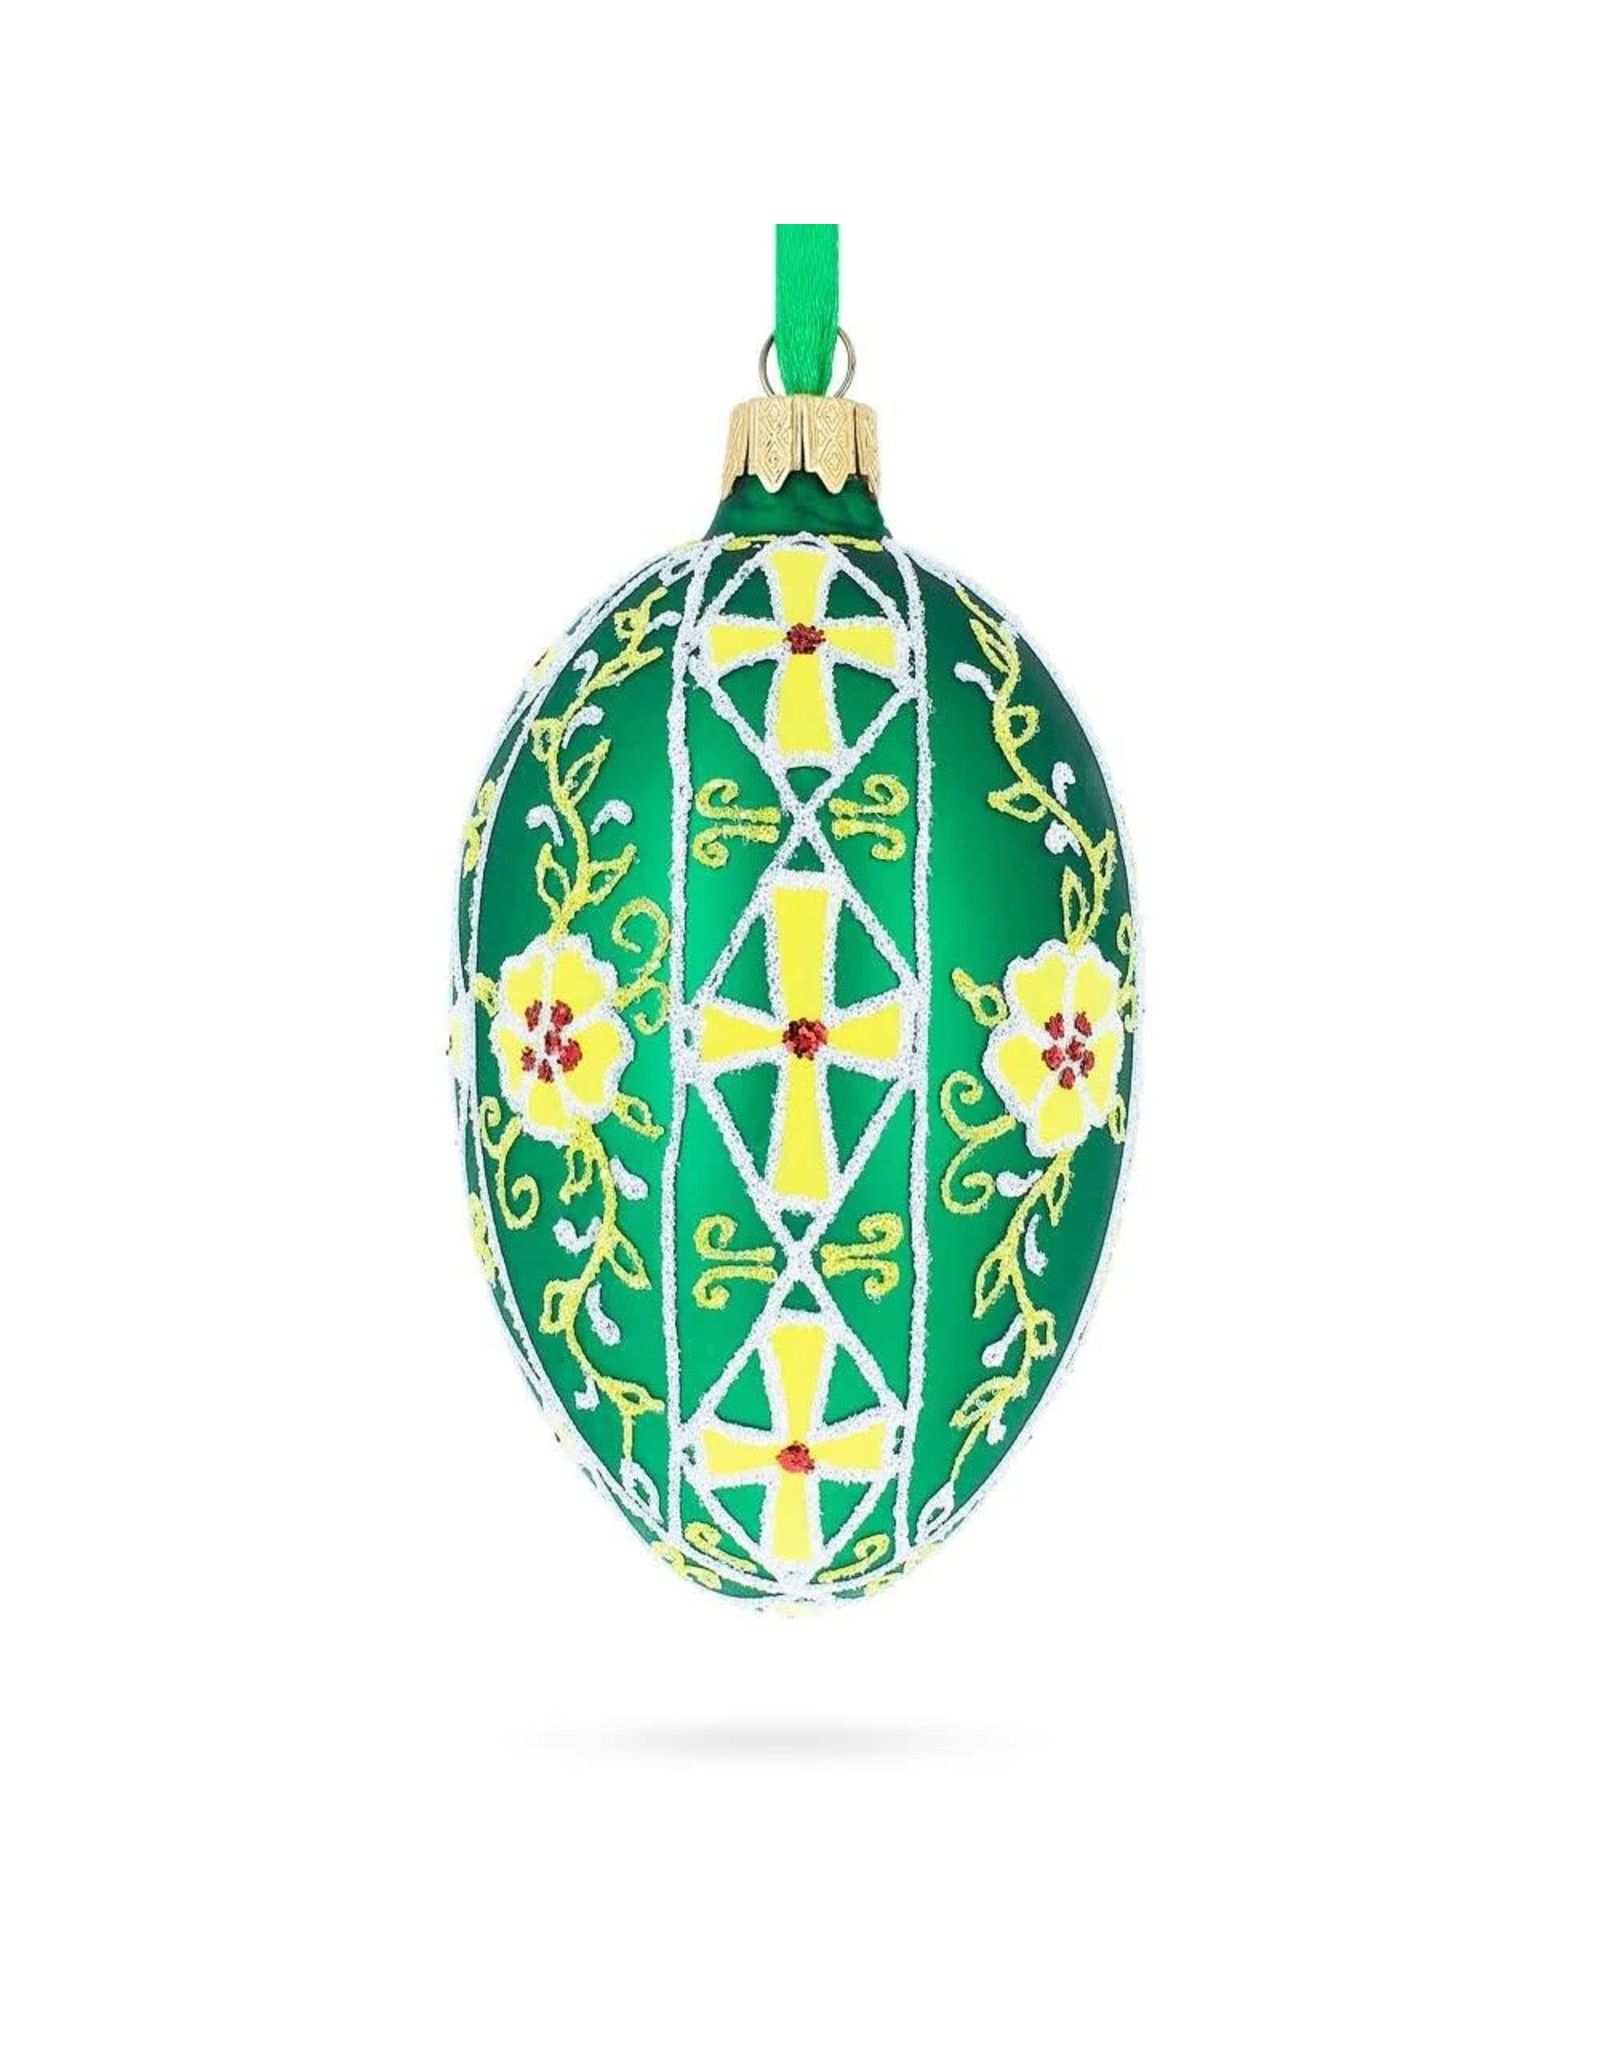 Gold Crosses on Green Glass Pysanky Egg Ornament